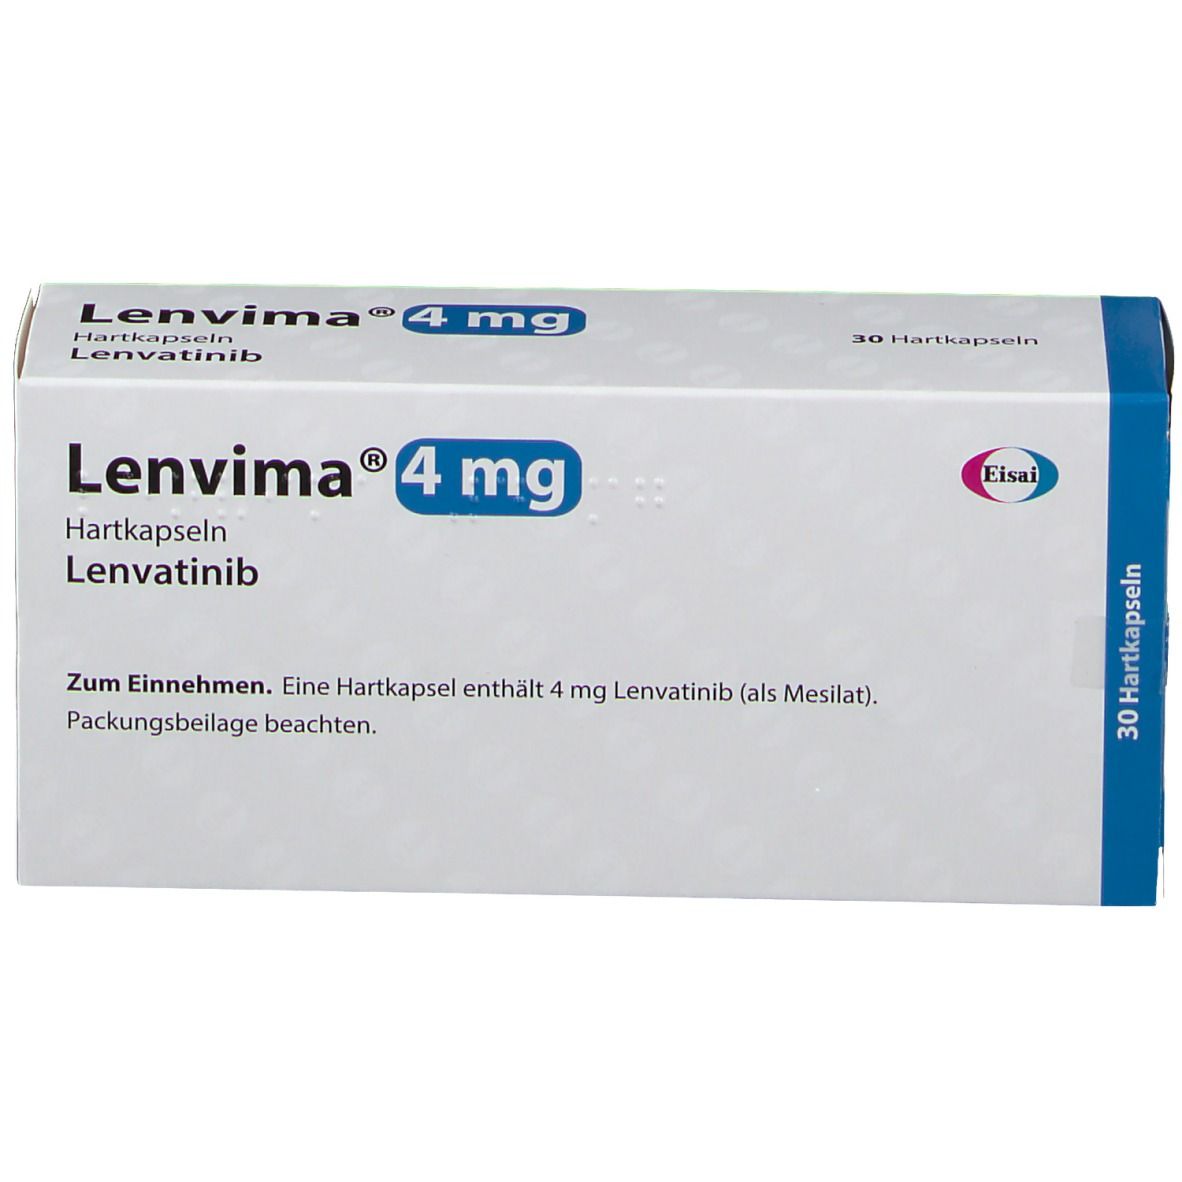 Lenvima® 4 mg